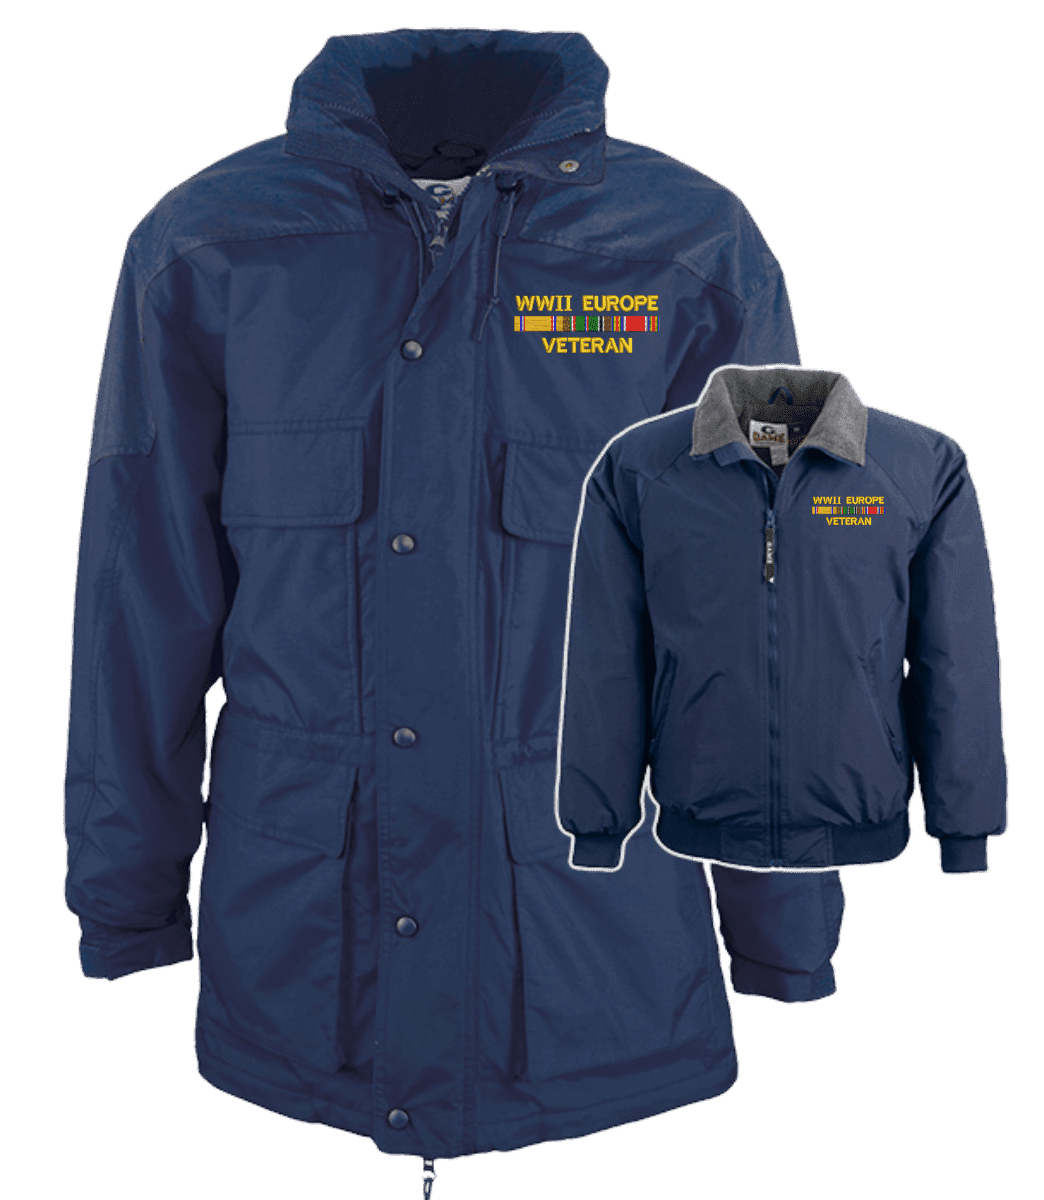 WWII Europe Veteran Game Sportswear Yukon 3-in-1 Jacket - Walmart.com